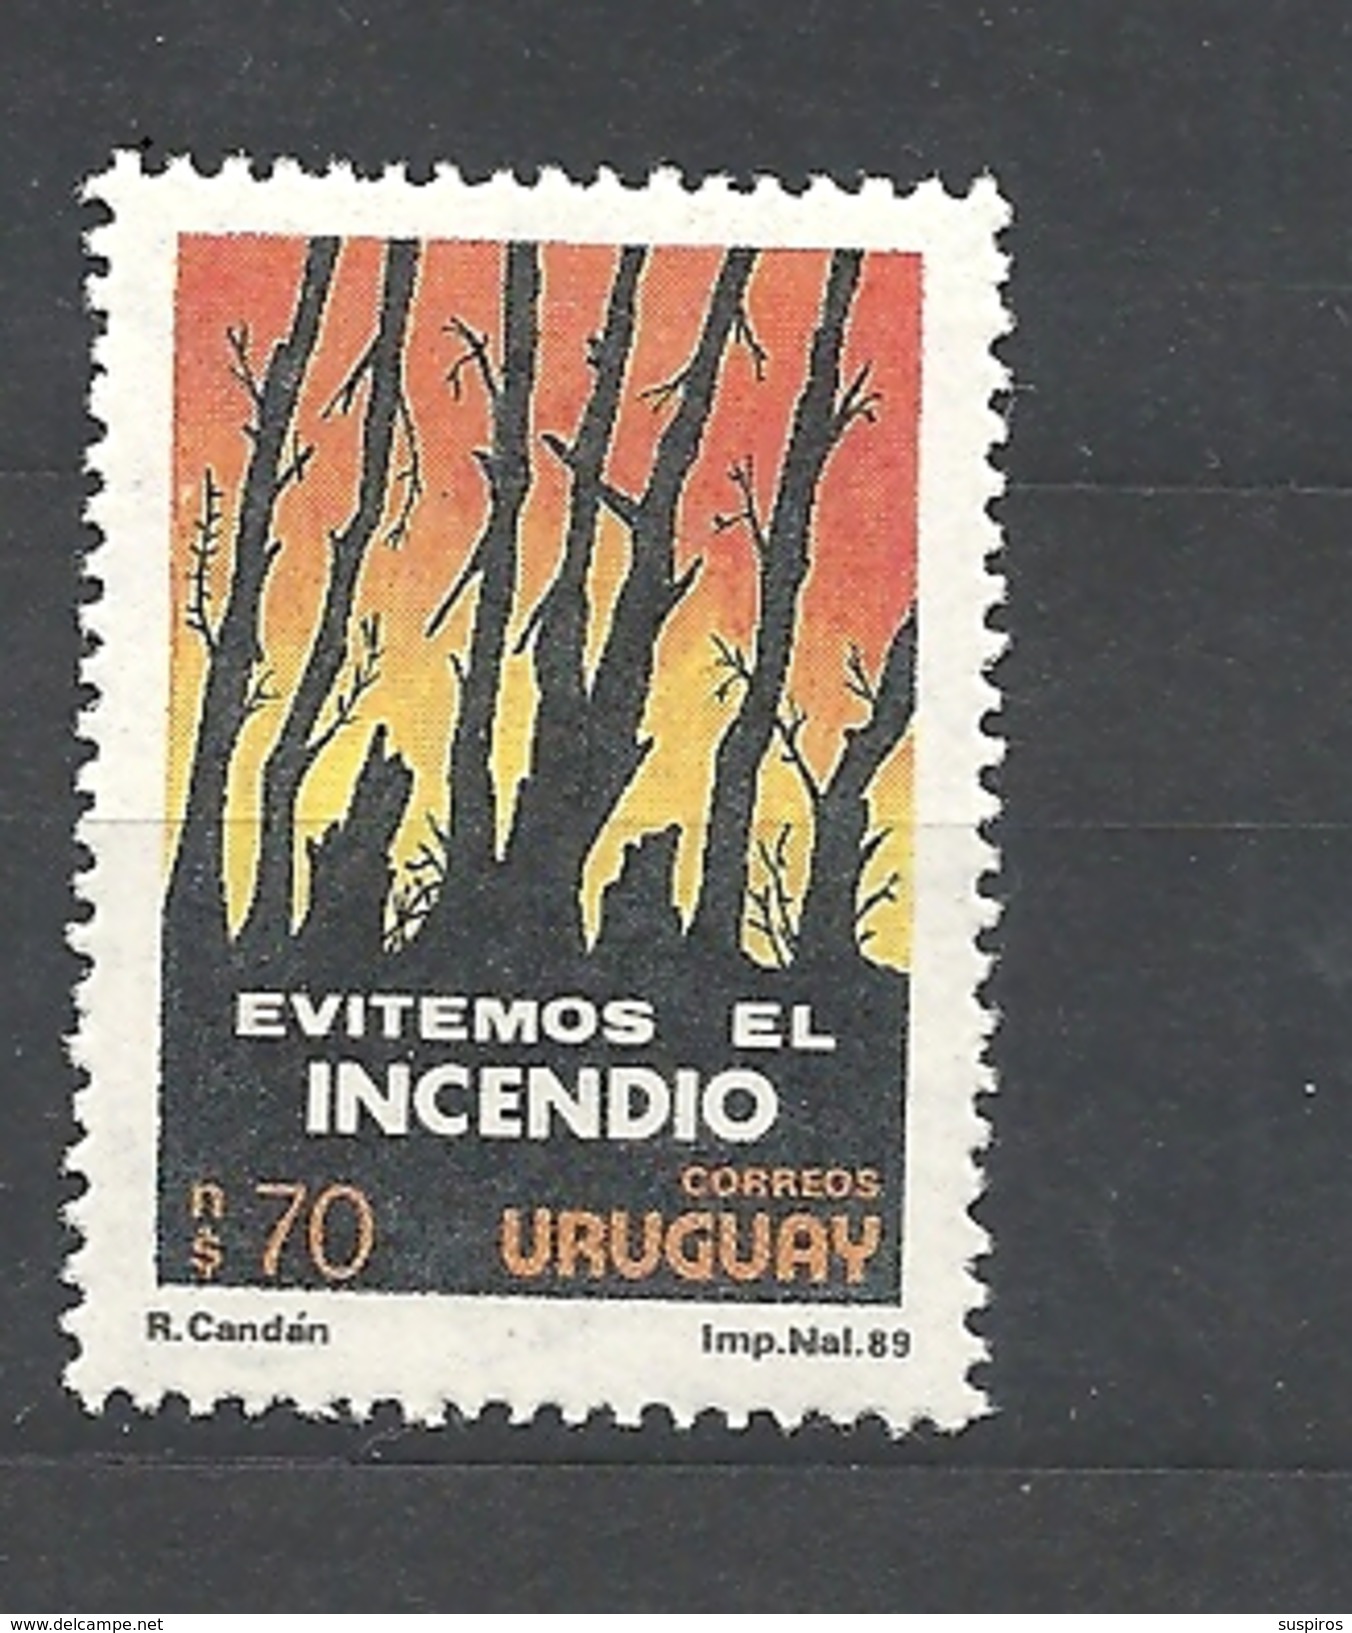 URUGUAY    1990 Fire Prevention   MNH - Uruguay